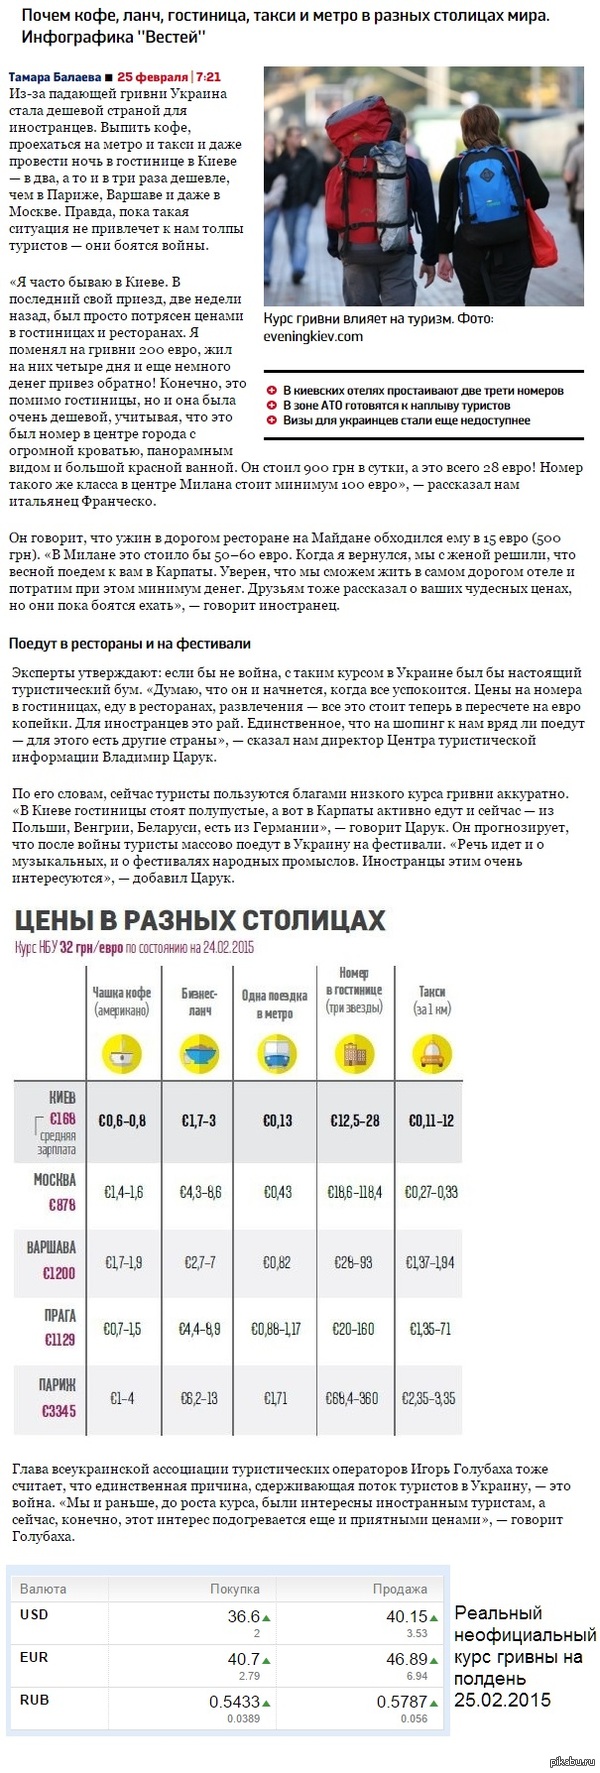            http://vesti-ukr.com/strana/90214-devalvacija-prevrawaet-ukrainu-v-odnu-iz-samyh-deshevyh-stran-dlja-turistov